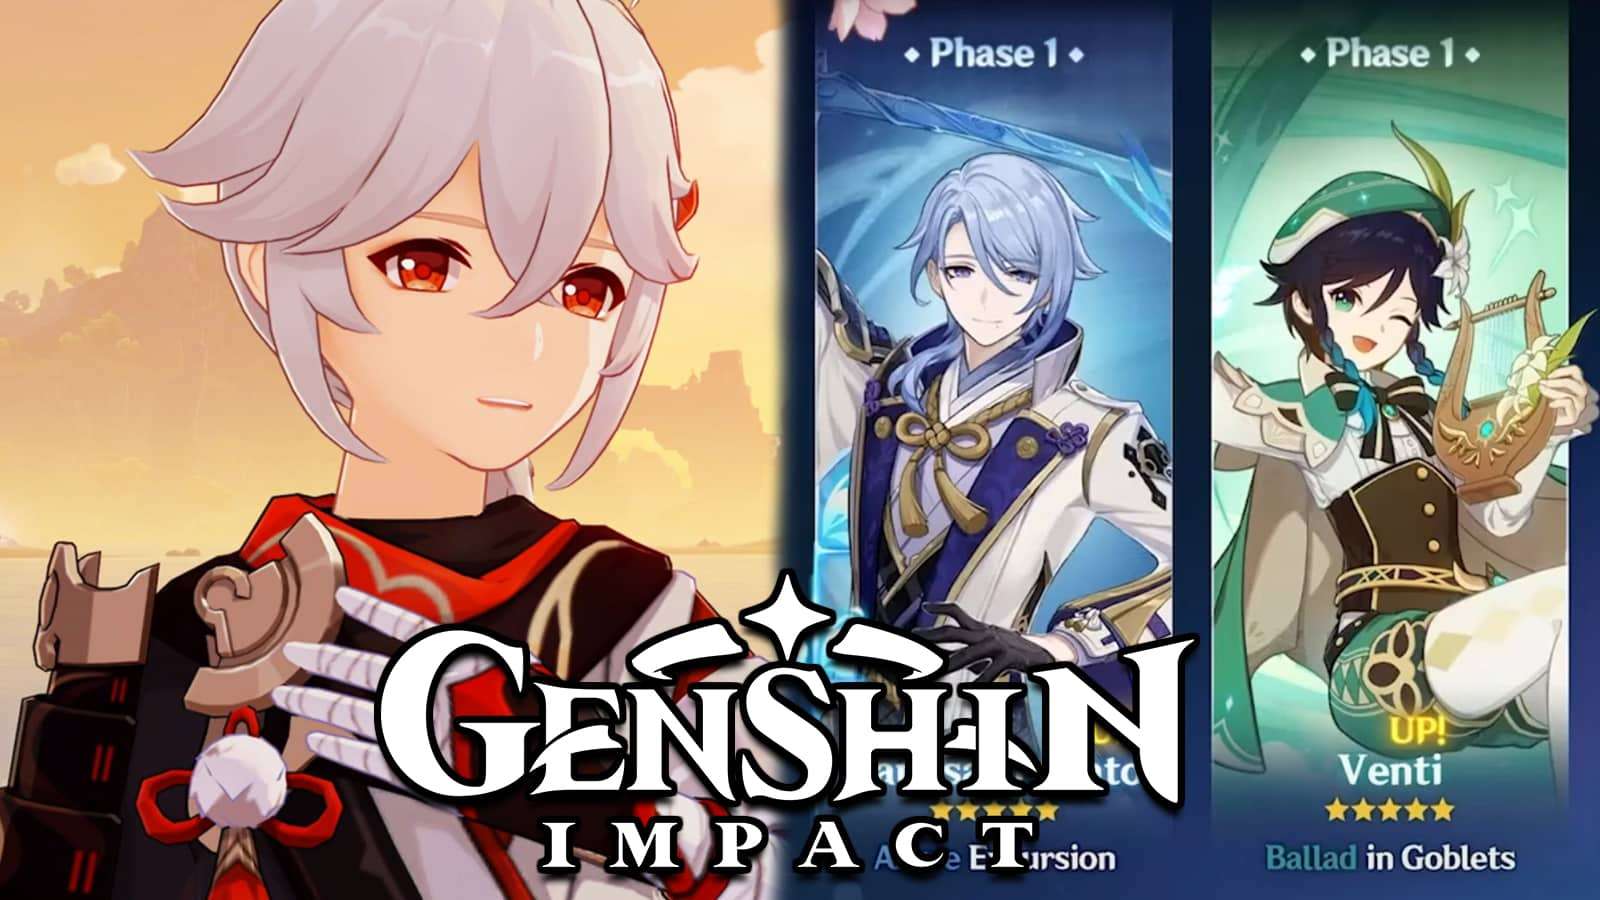 Genshin Impact Kazuha next to Venti and Ayato Version 2.6 banner screenshot.